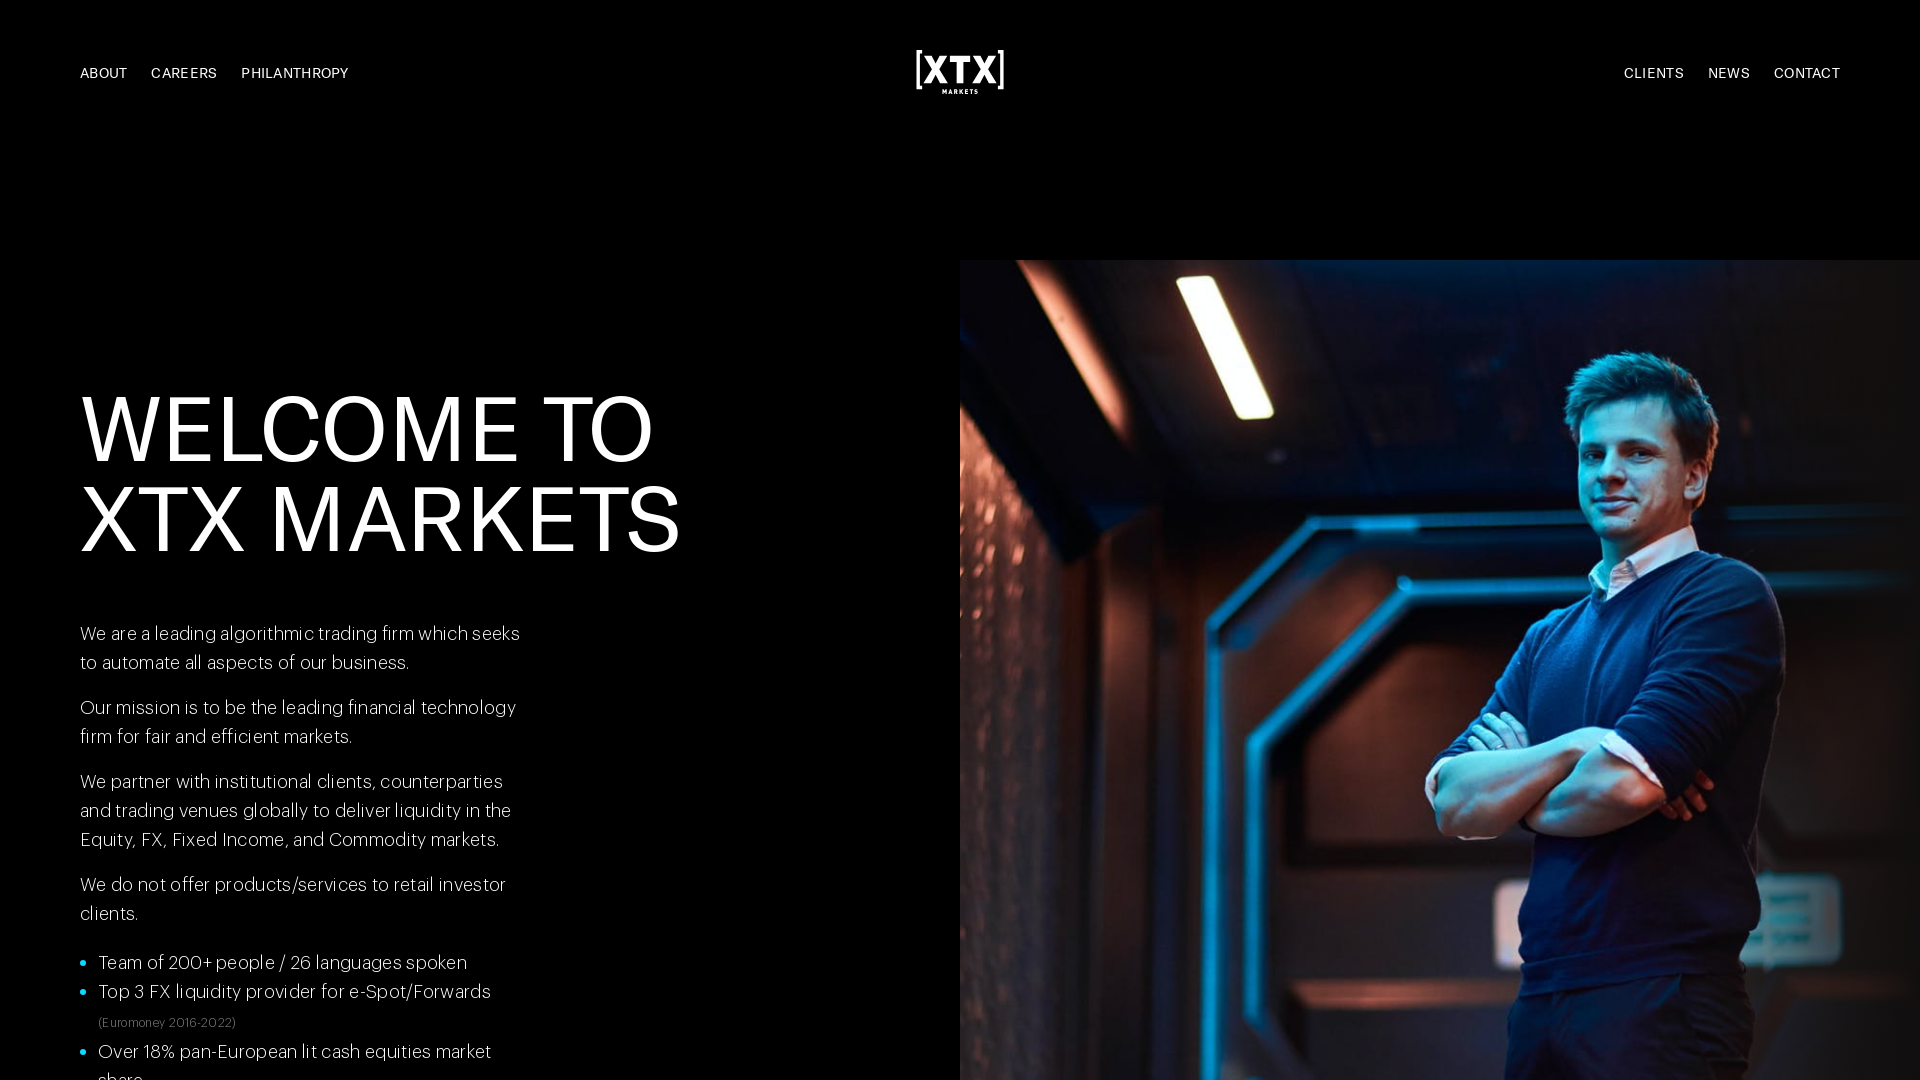 XTX Markets